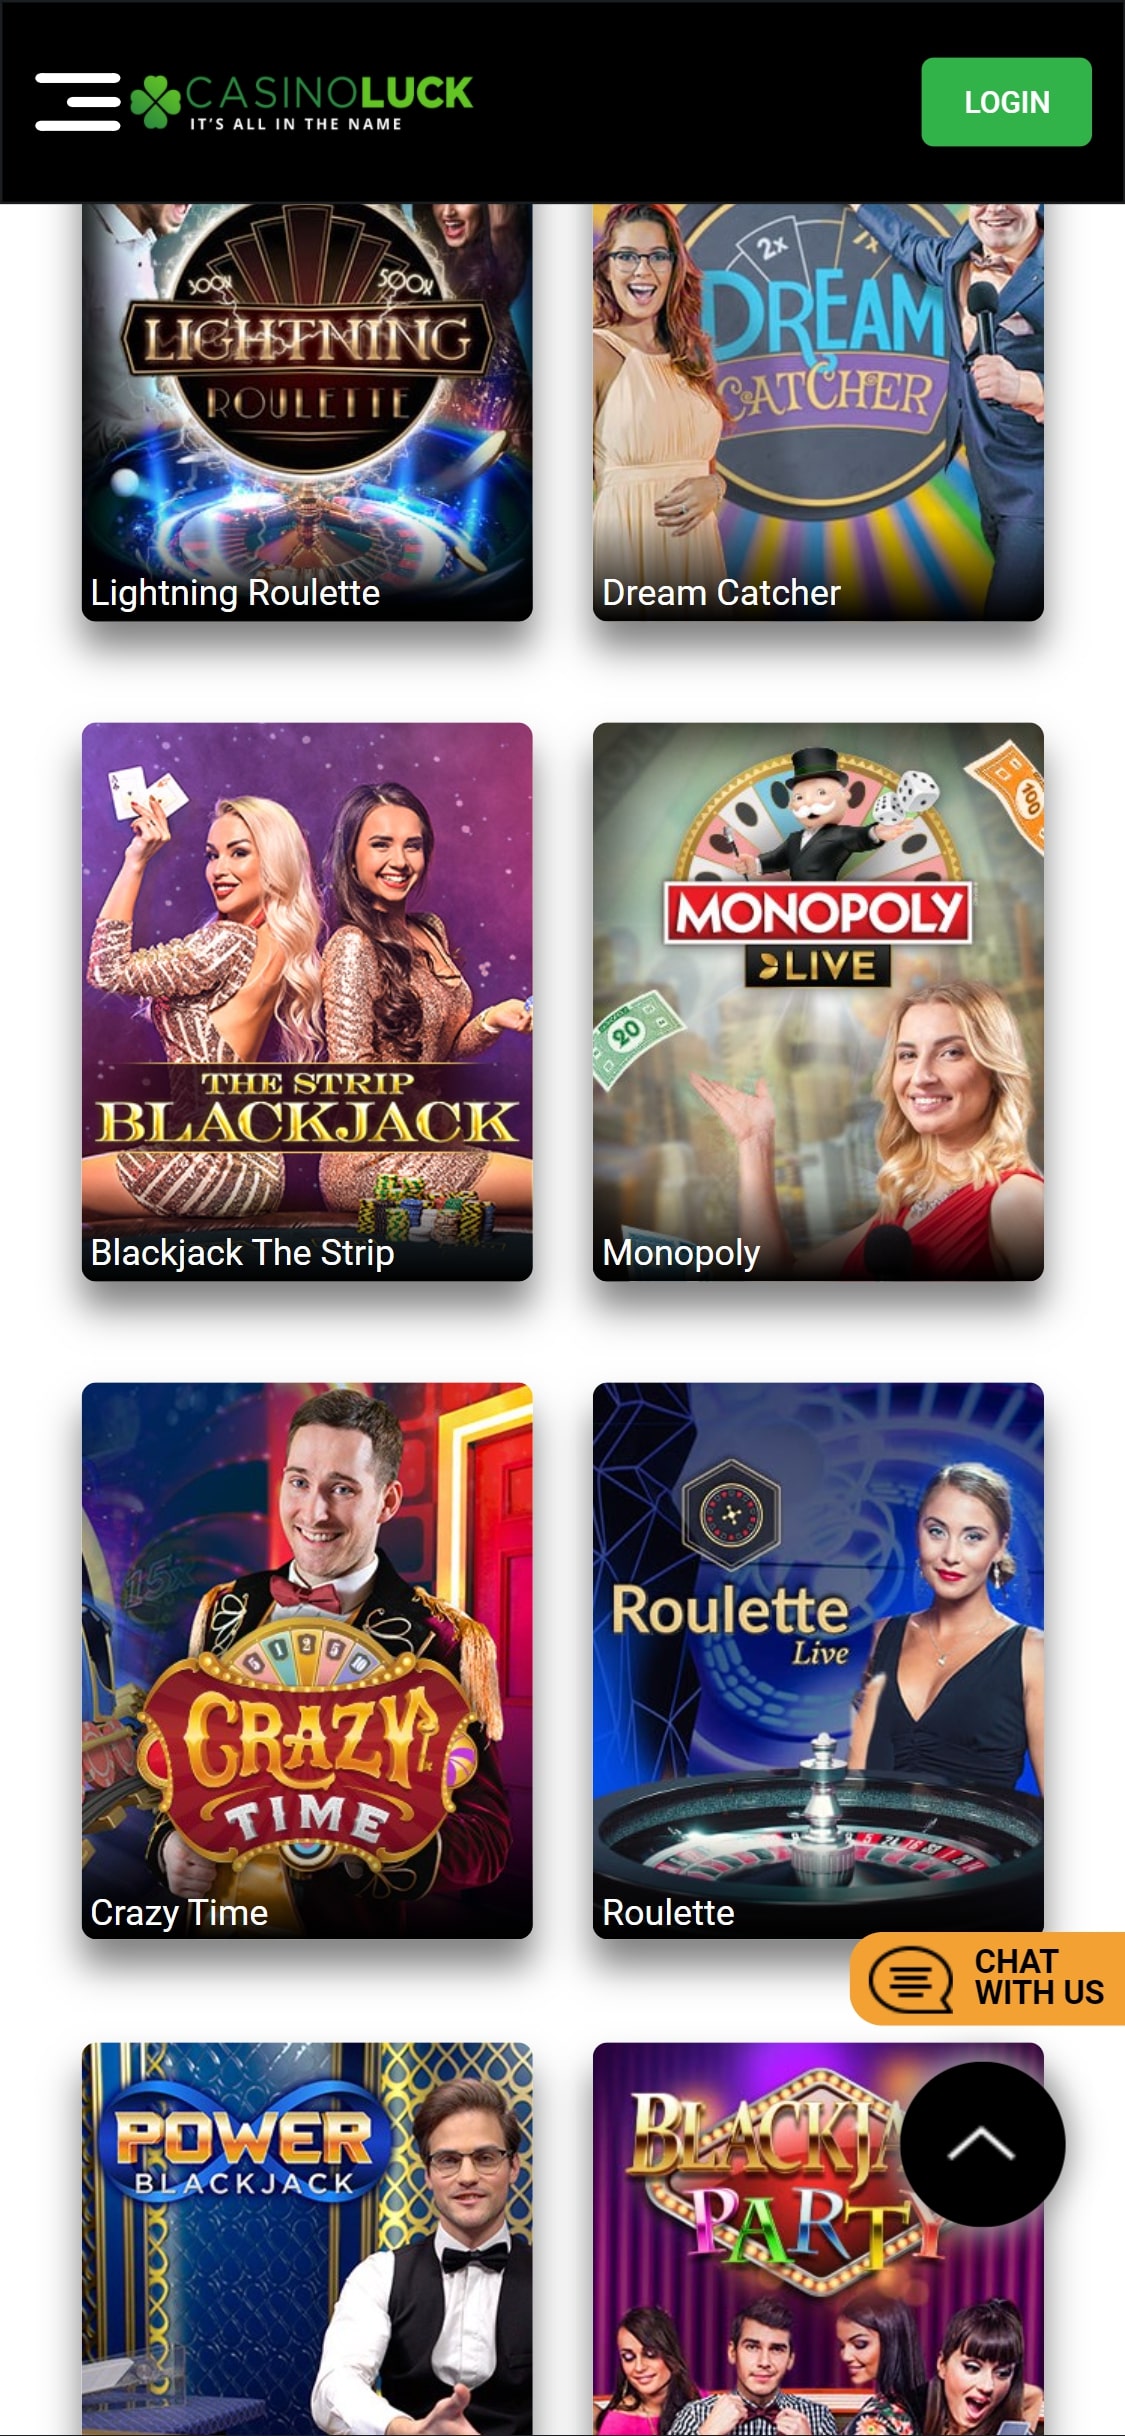 CasinoLuck Mobile Live Dealer Games Review